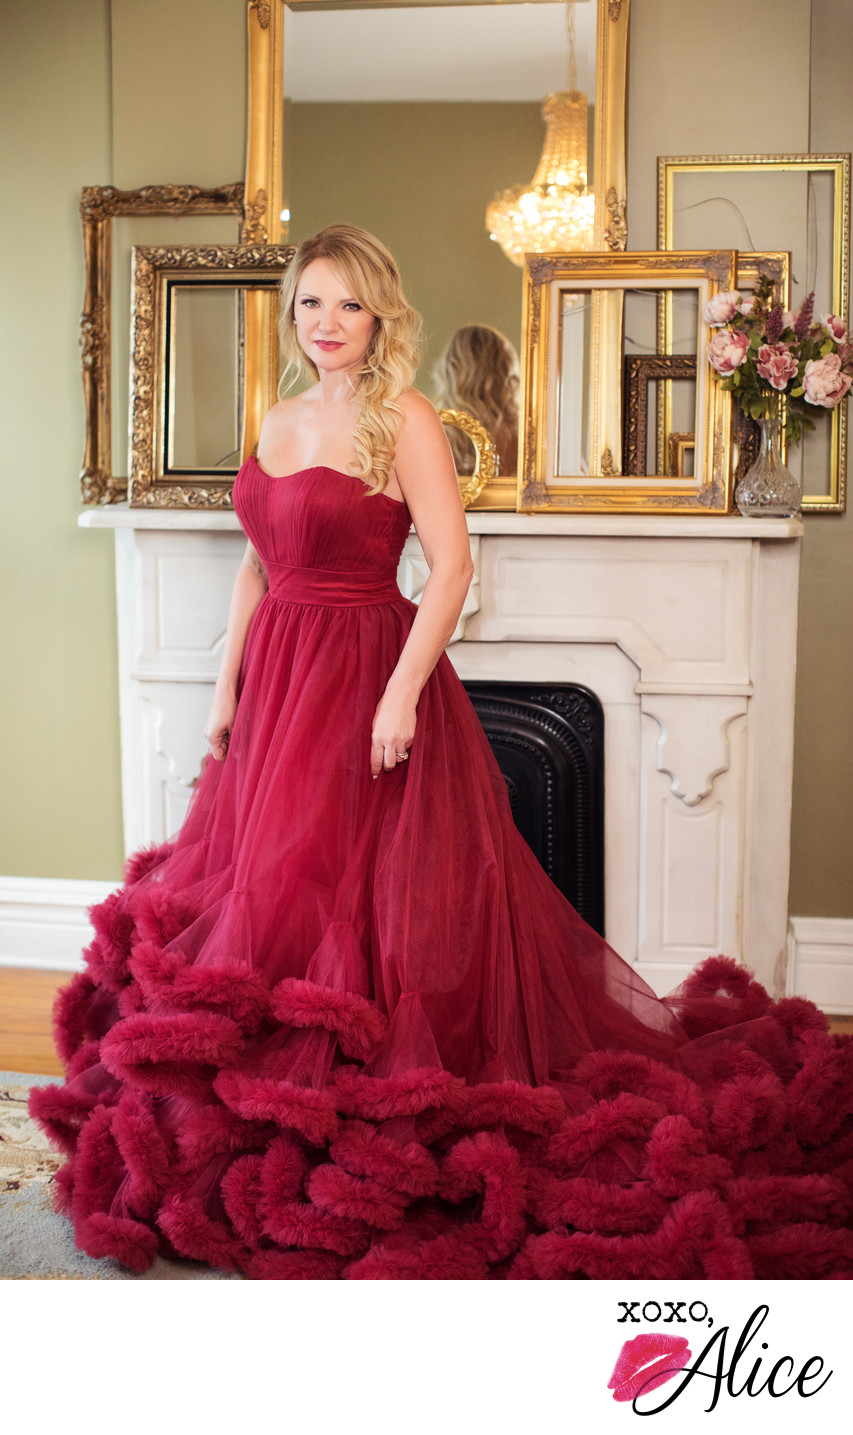 glamorous red dress tulle fireplace gold frame studio